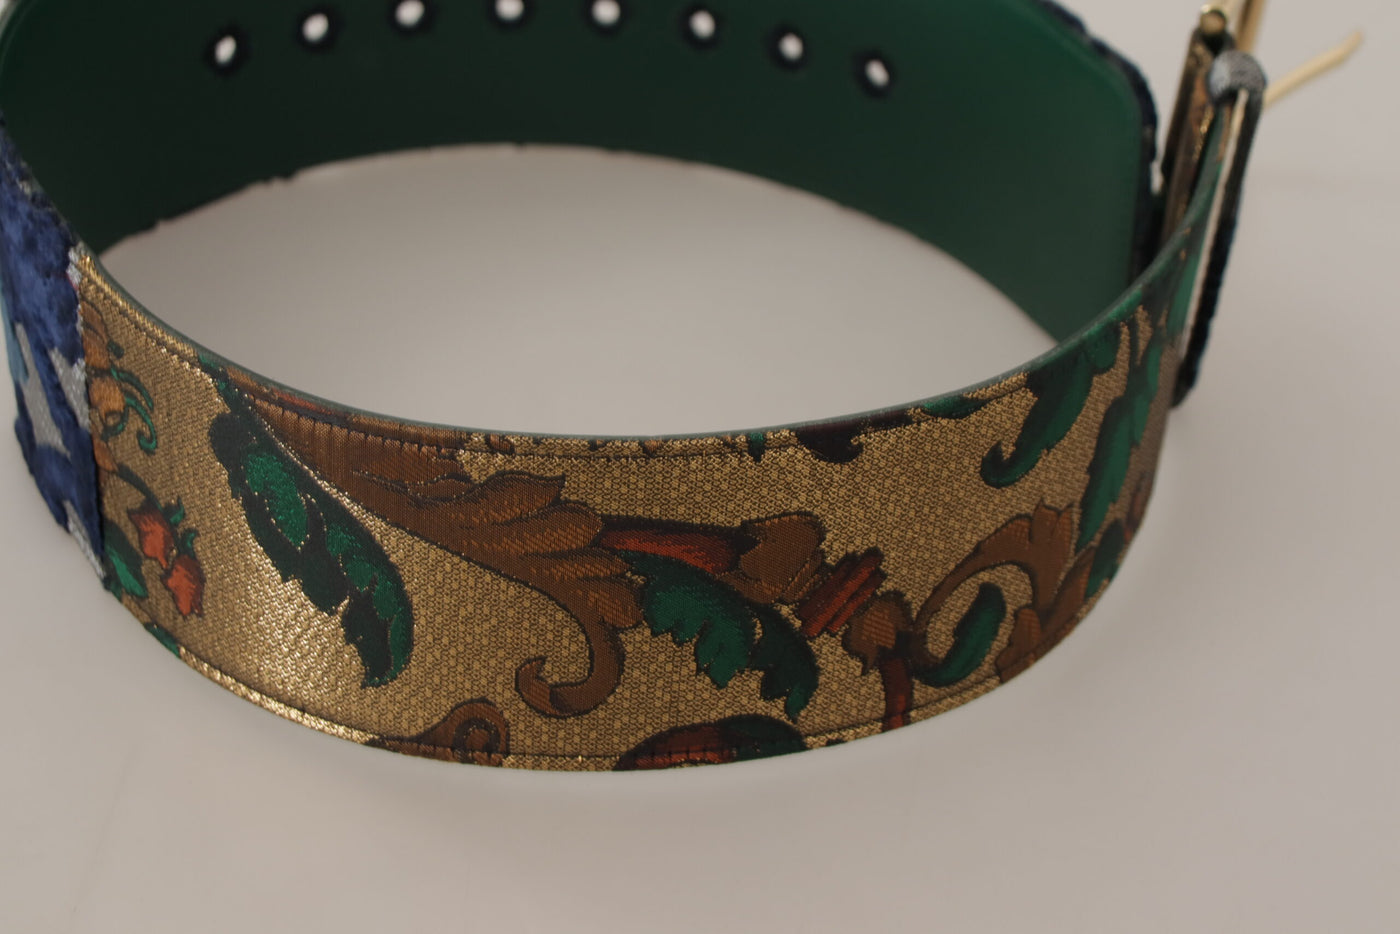 Dolce & Gabbana Green Jacquard Embroid Leather Gold Metal Buckle Belt